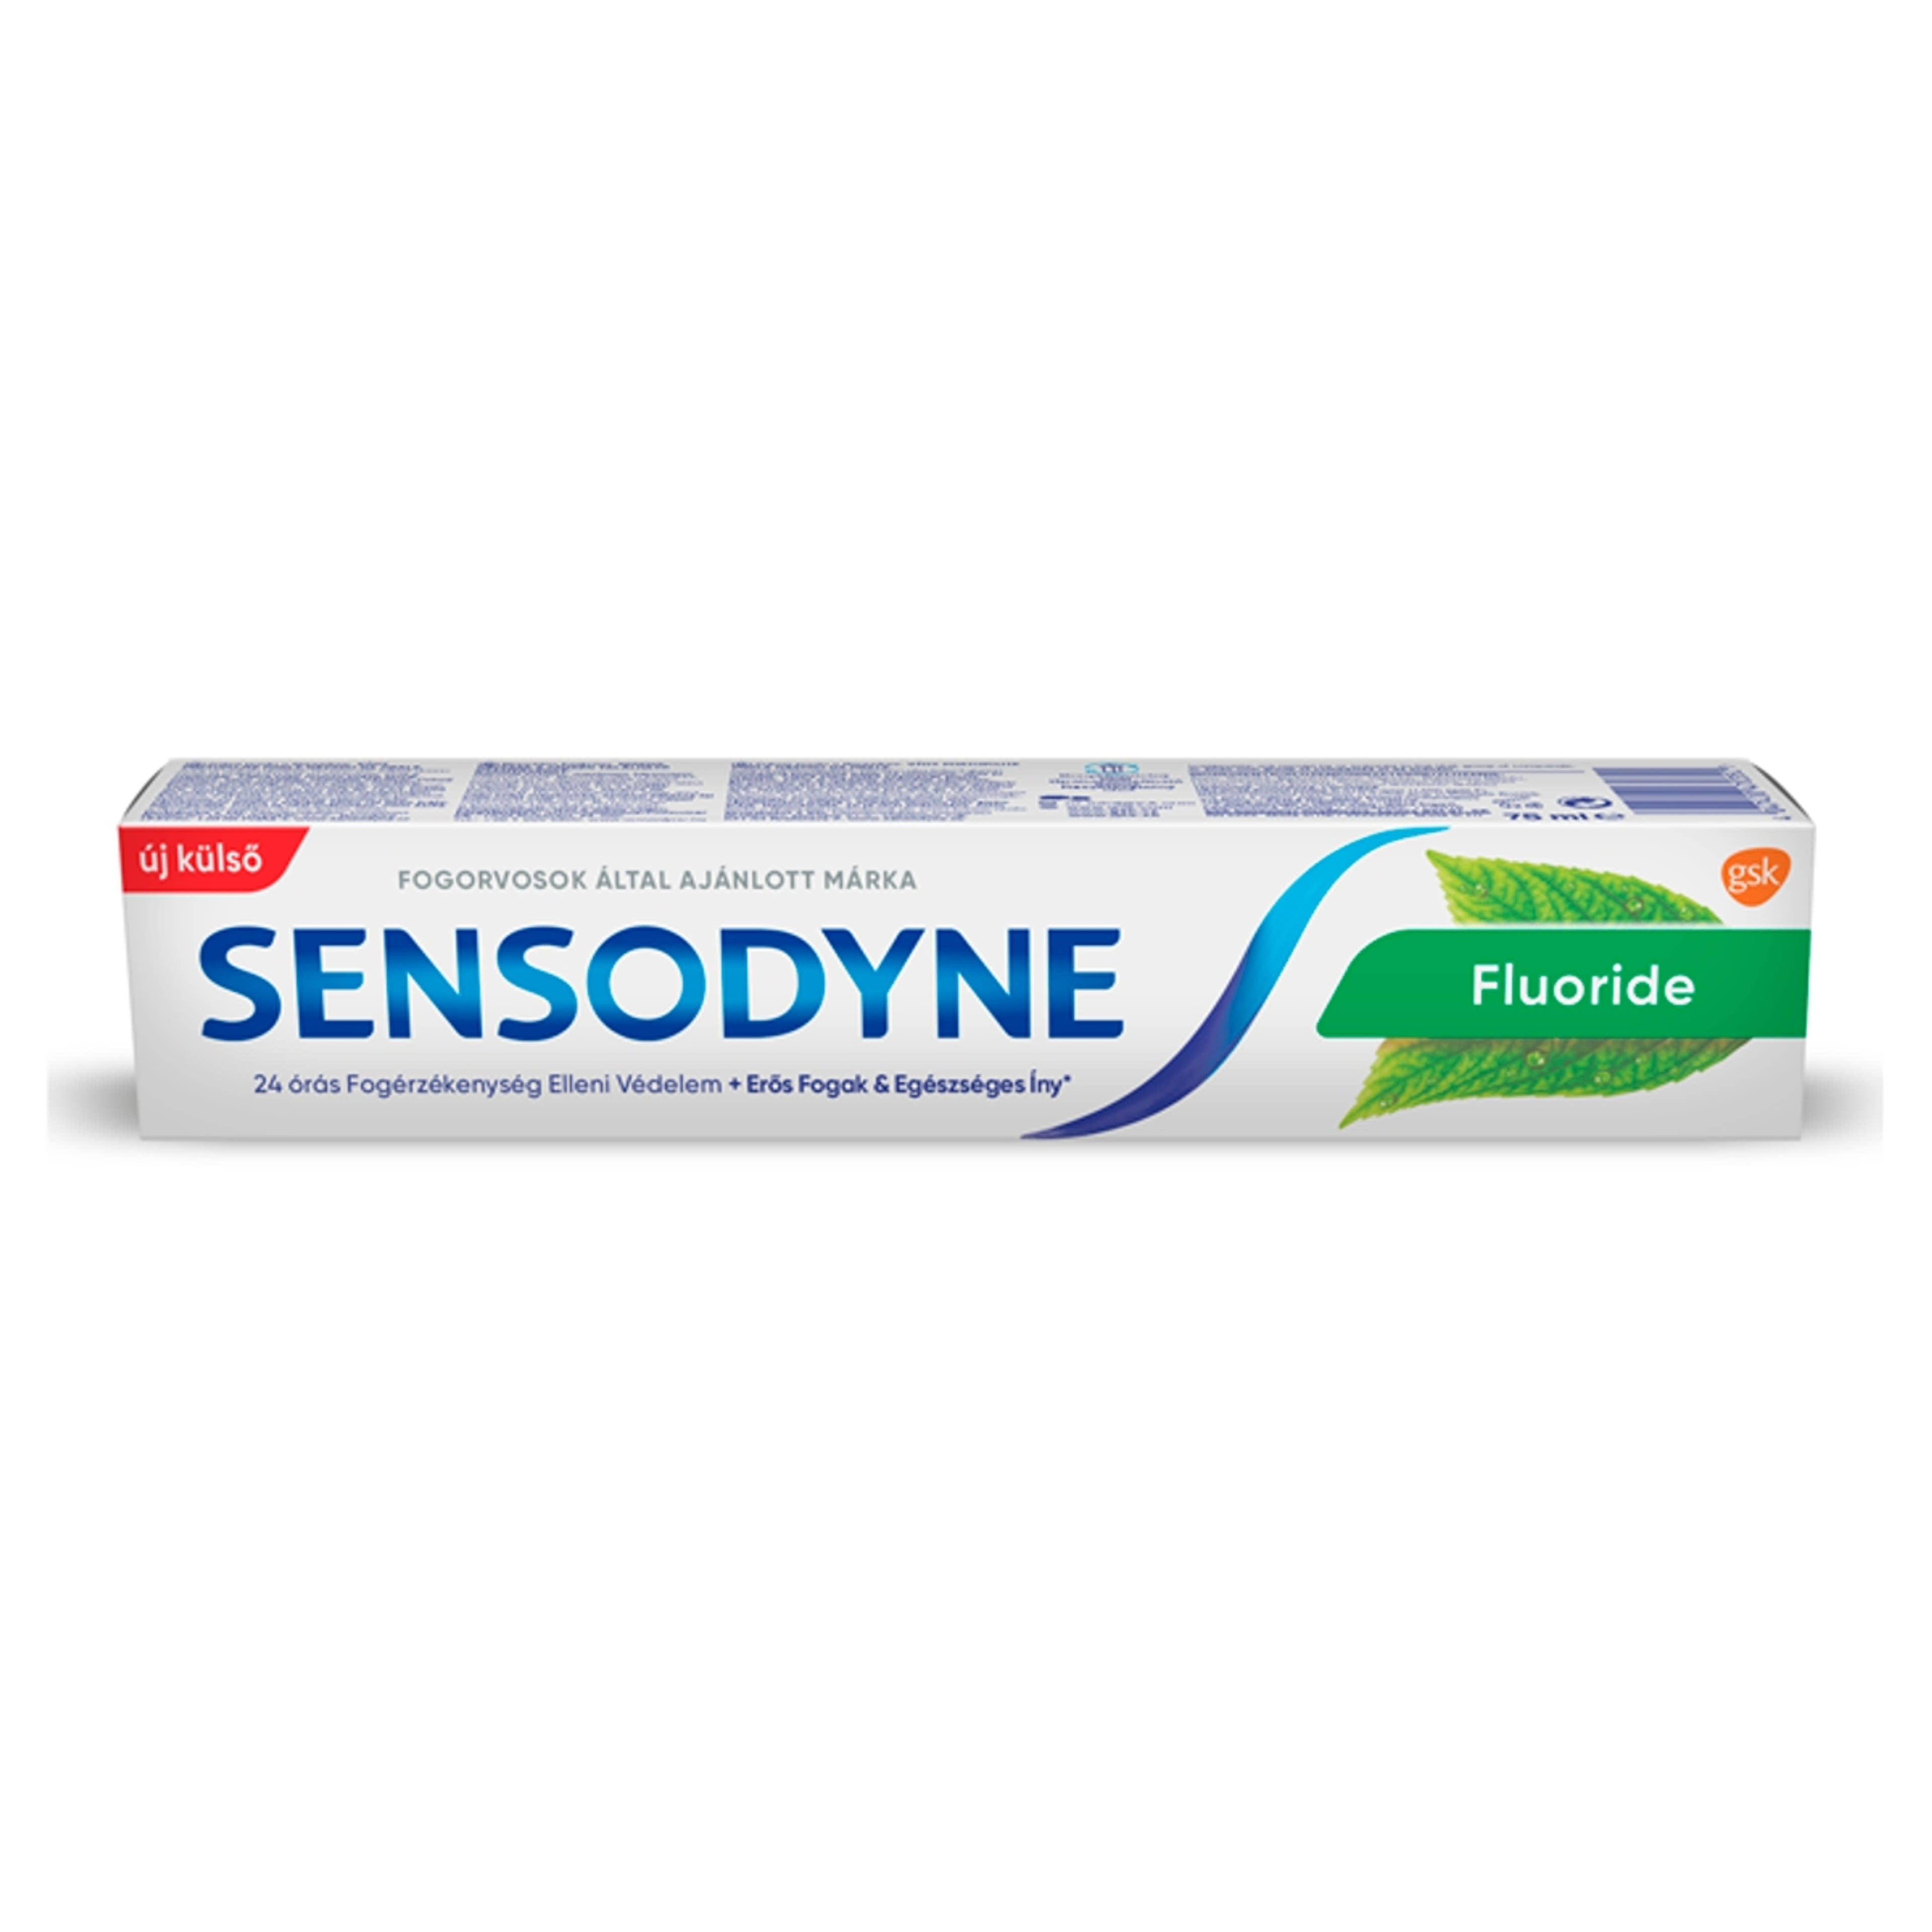 Sensodyne Flourid + Menta fogkrém - 75 ml-1